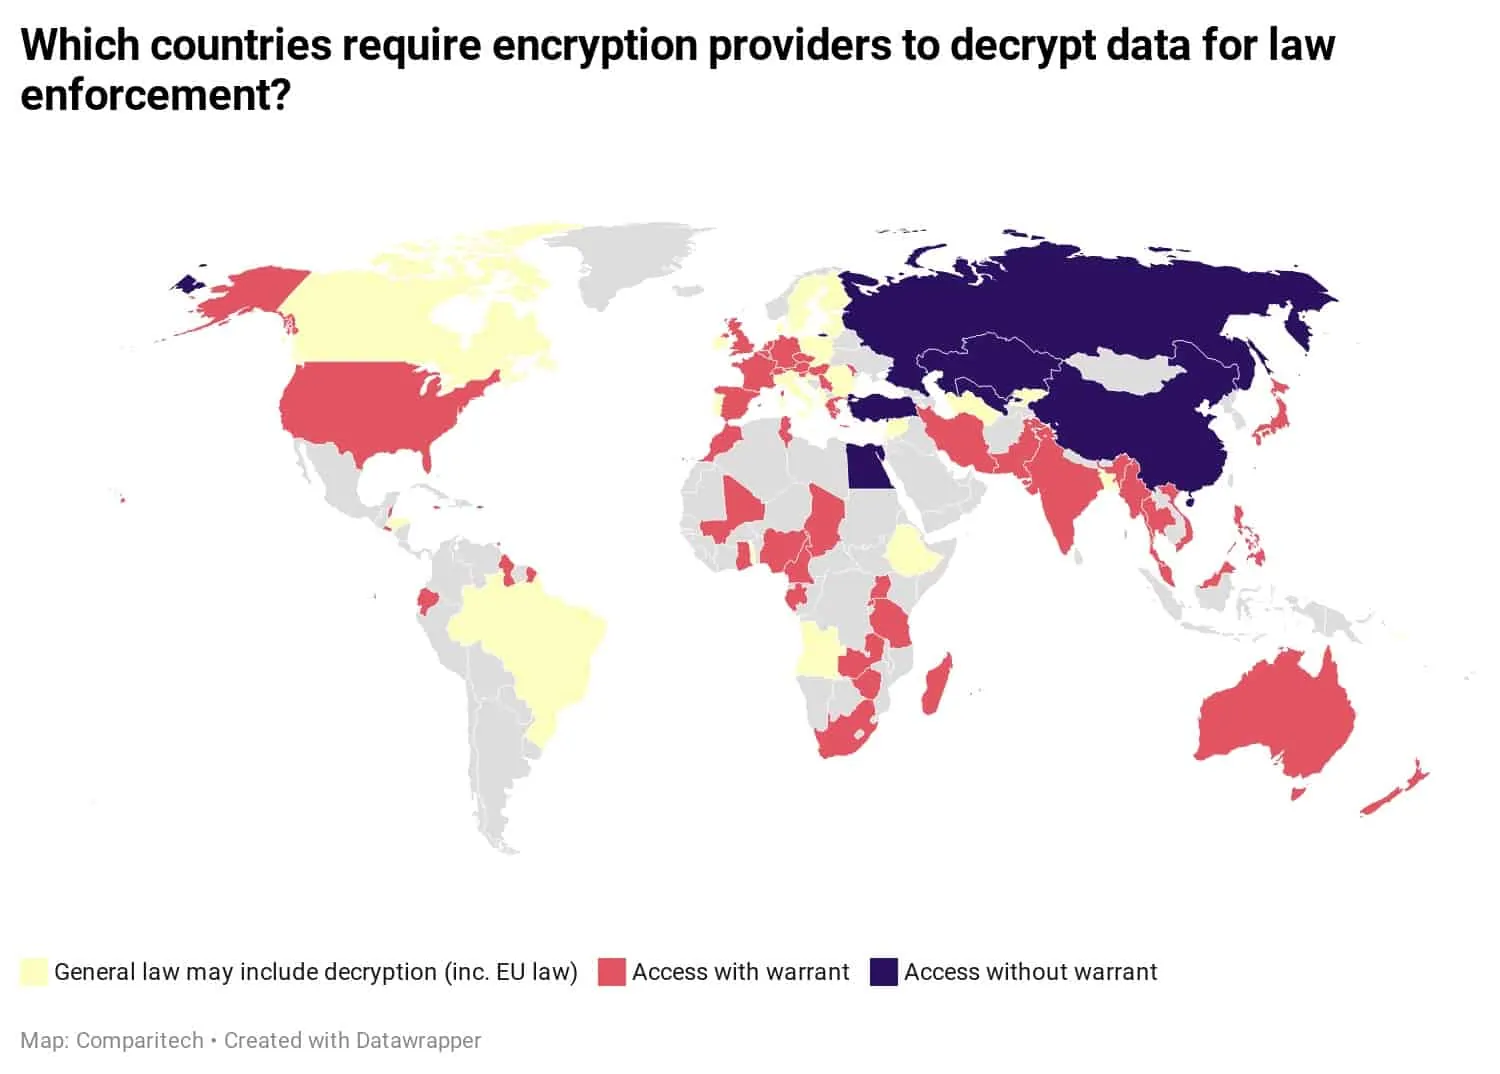 Encryption providers